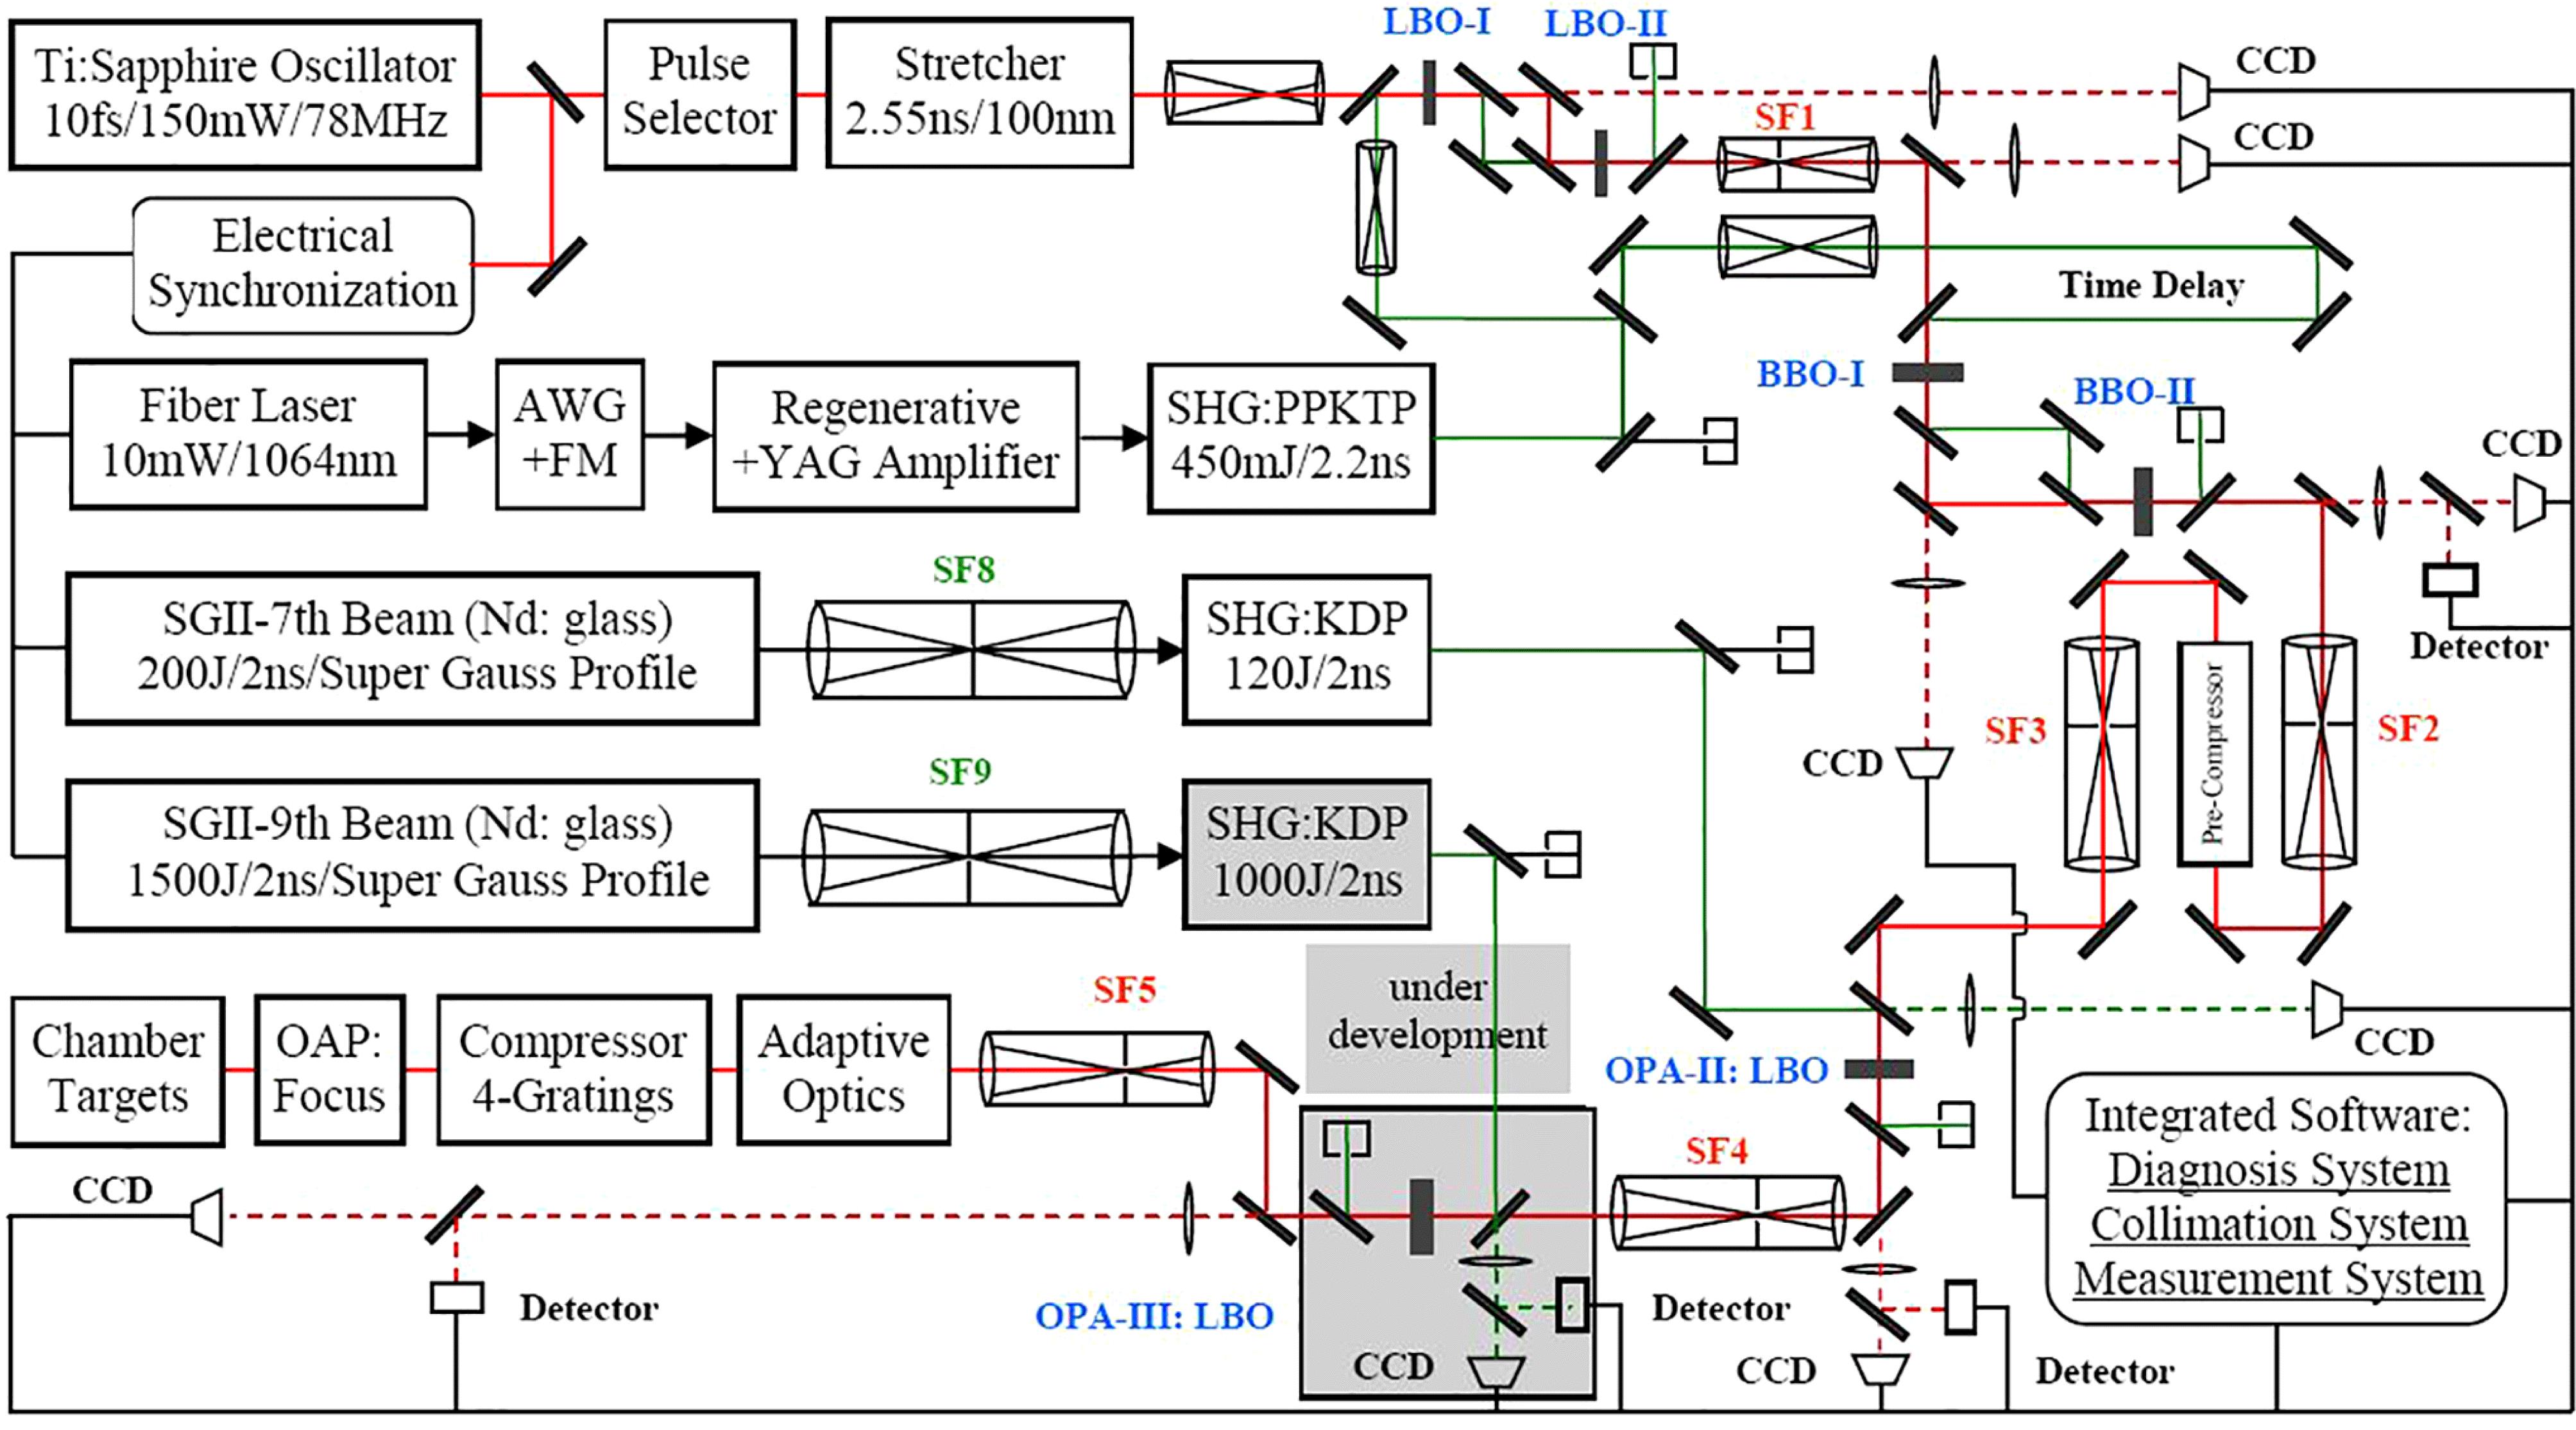 Schematic of the SG-II 5PW laser facility. AO: adaptive optics; HS: Hartmann sensor; DM: deformable mirror; OAP: off-axis parabolic mirror; AWG: arbitrary waveform generator; FM: frequency modulator.